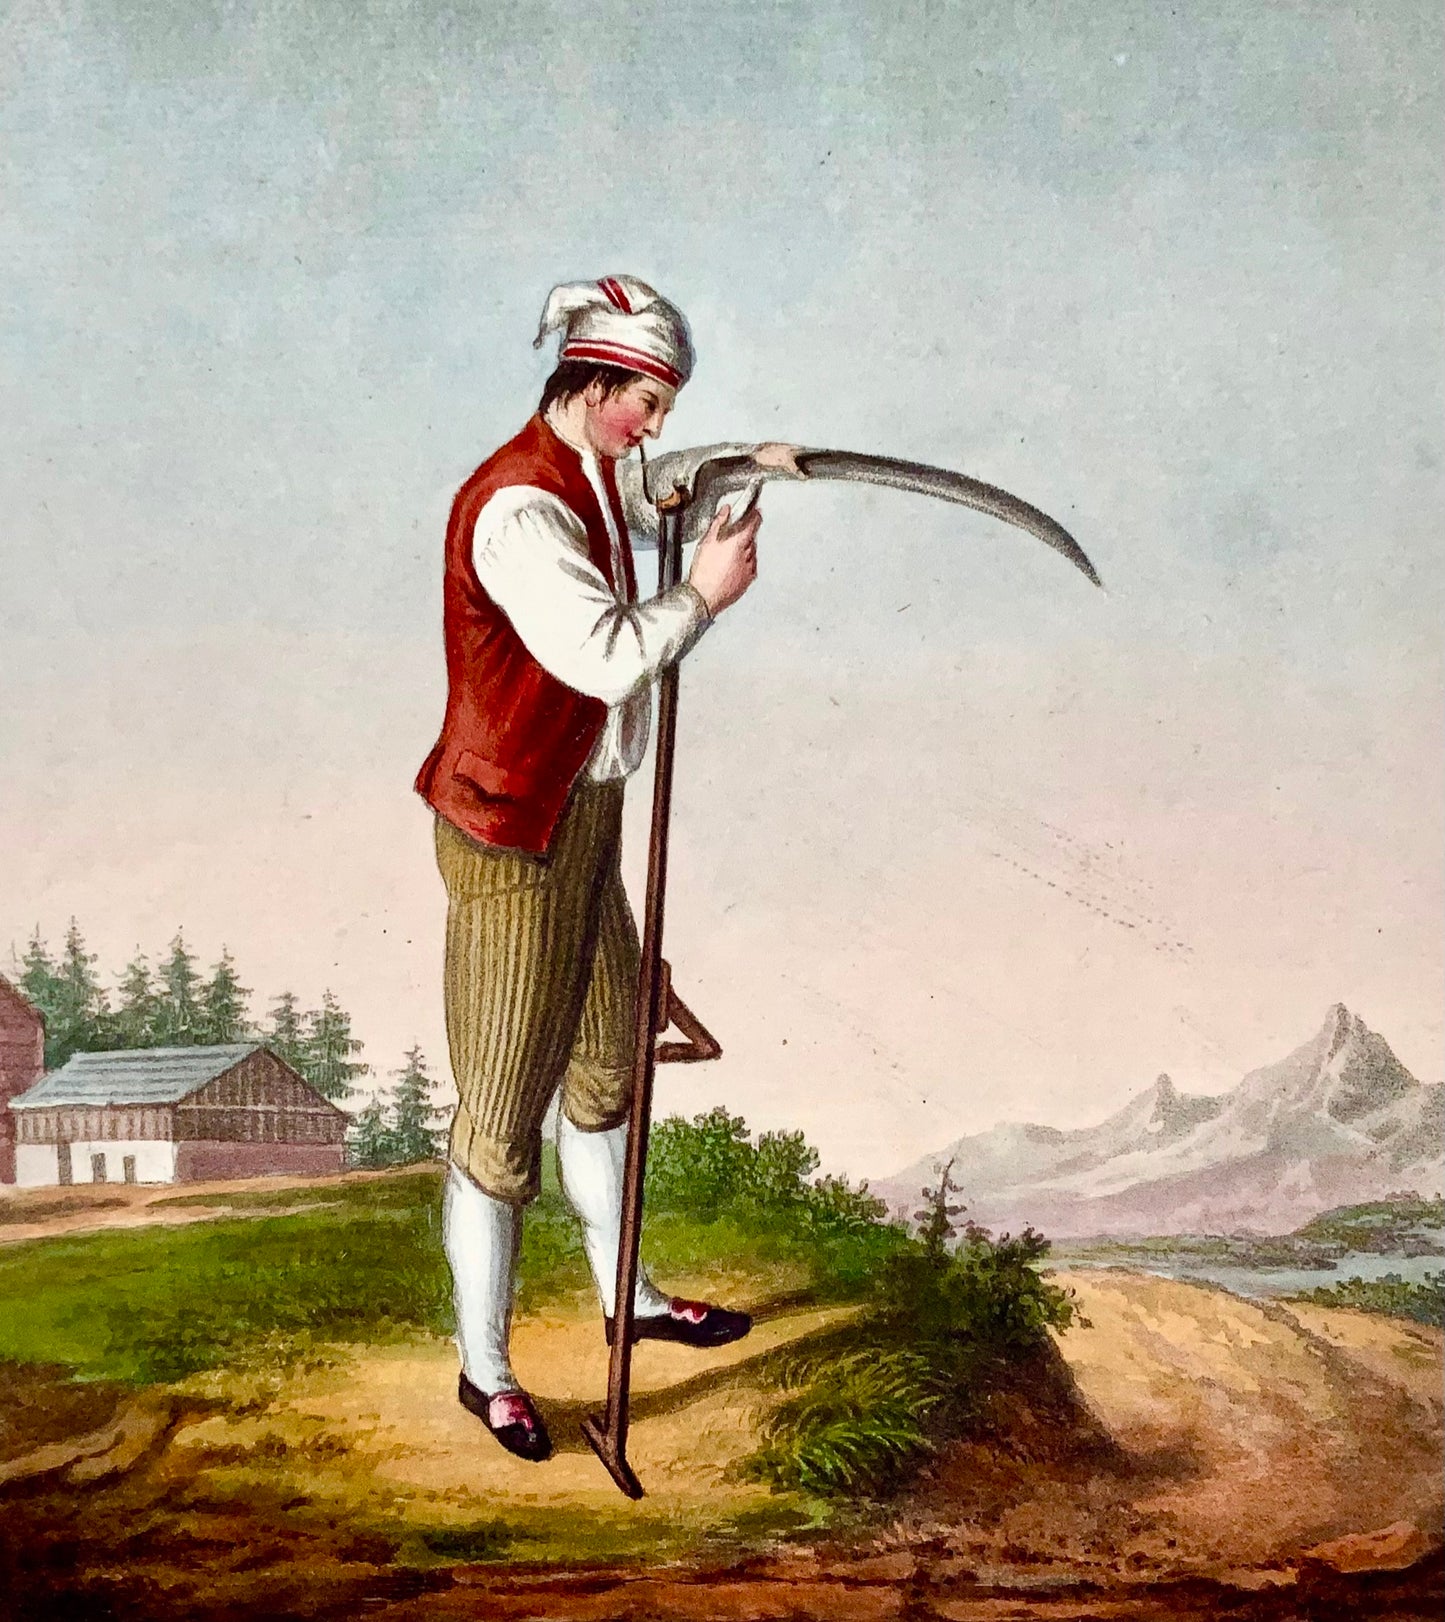 1822 Chr. Mechelt, sharpening sythe in Bern, Switzerland, hand coloured aquatint, costumes